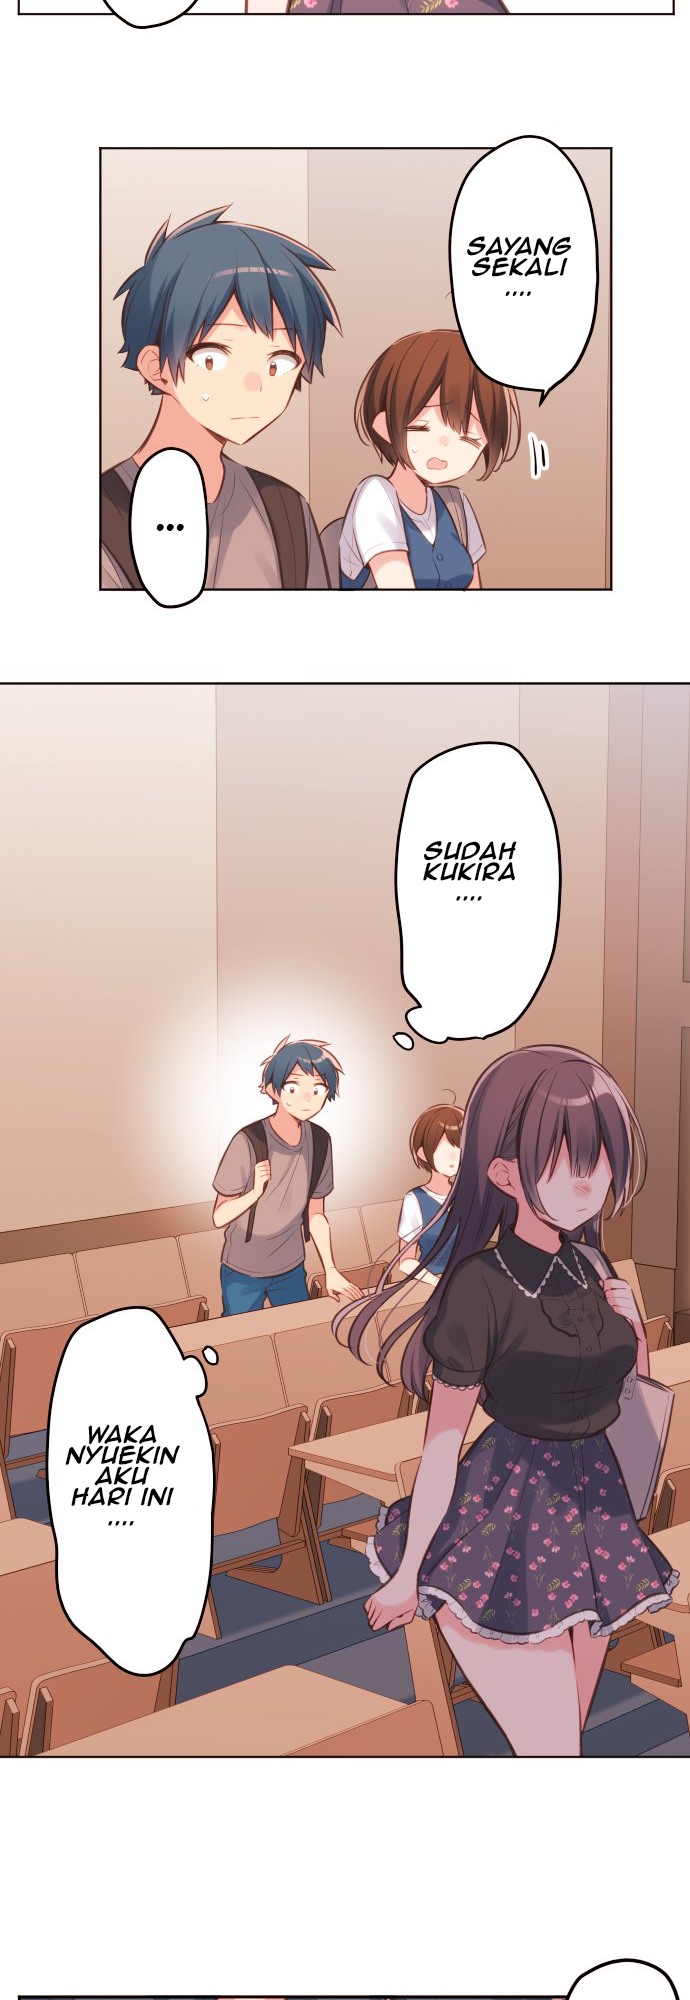 Waka-chan Is Flirty Again Chapter 31 20